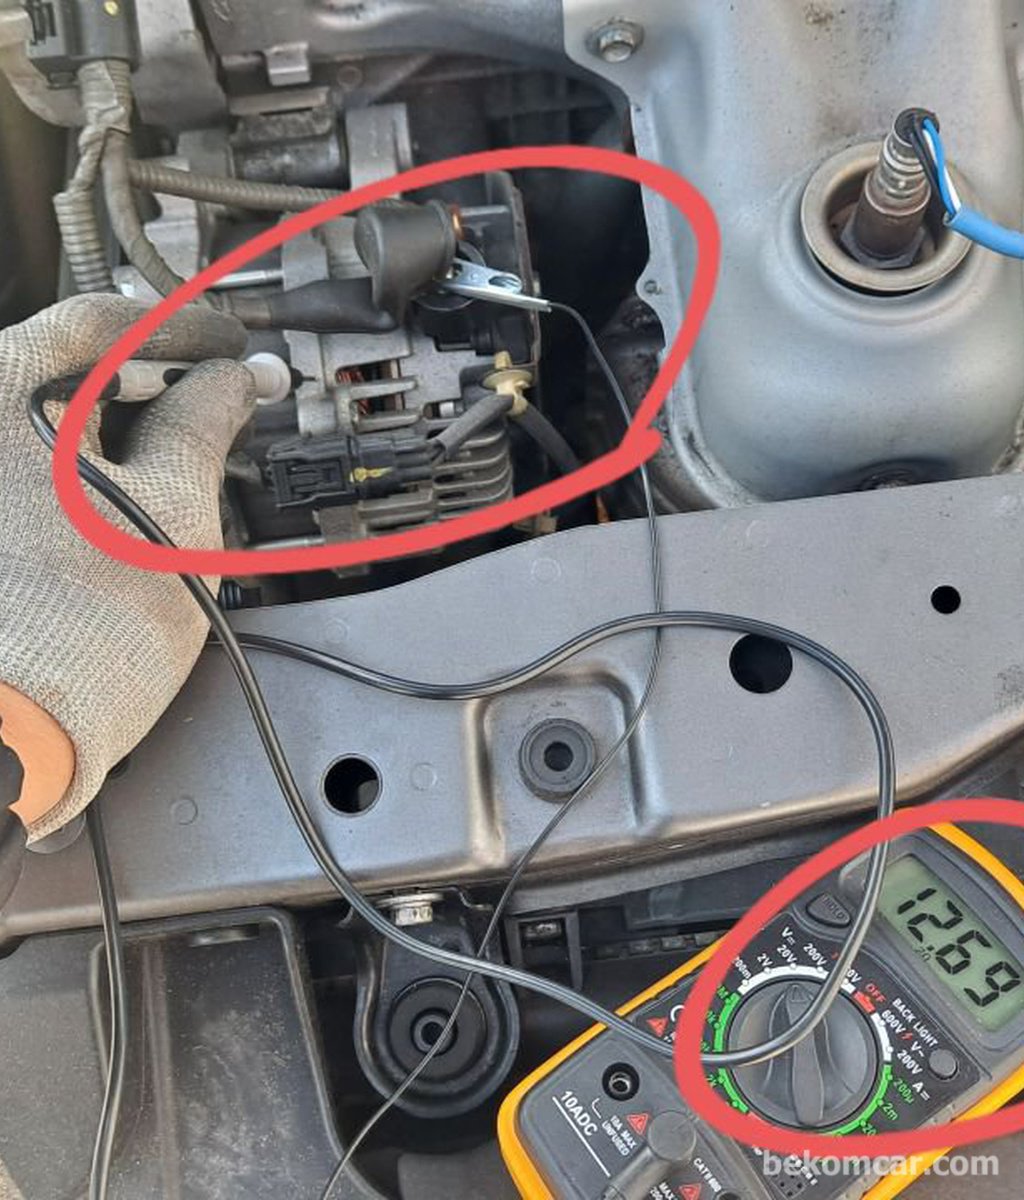 Used car purchase inspection. alternator failure case|bekomcar.com